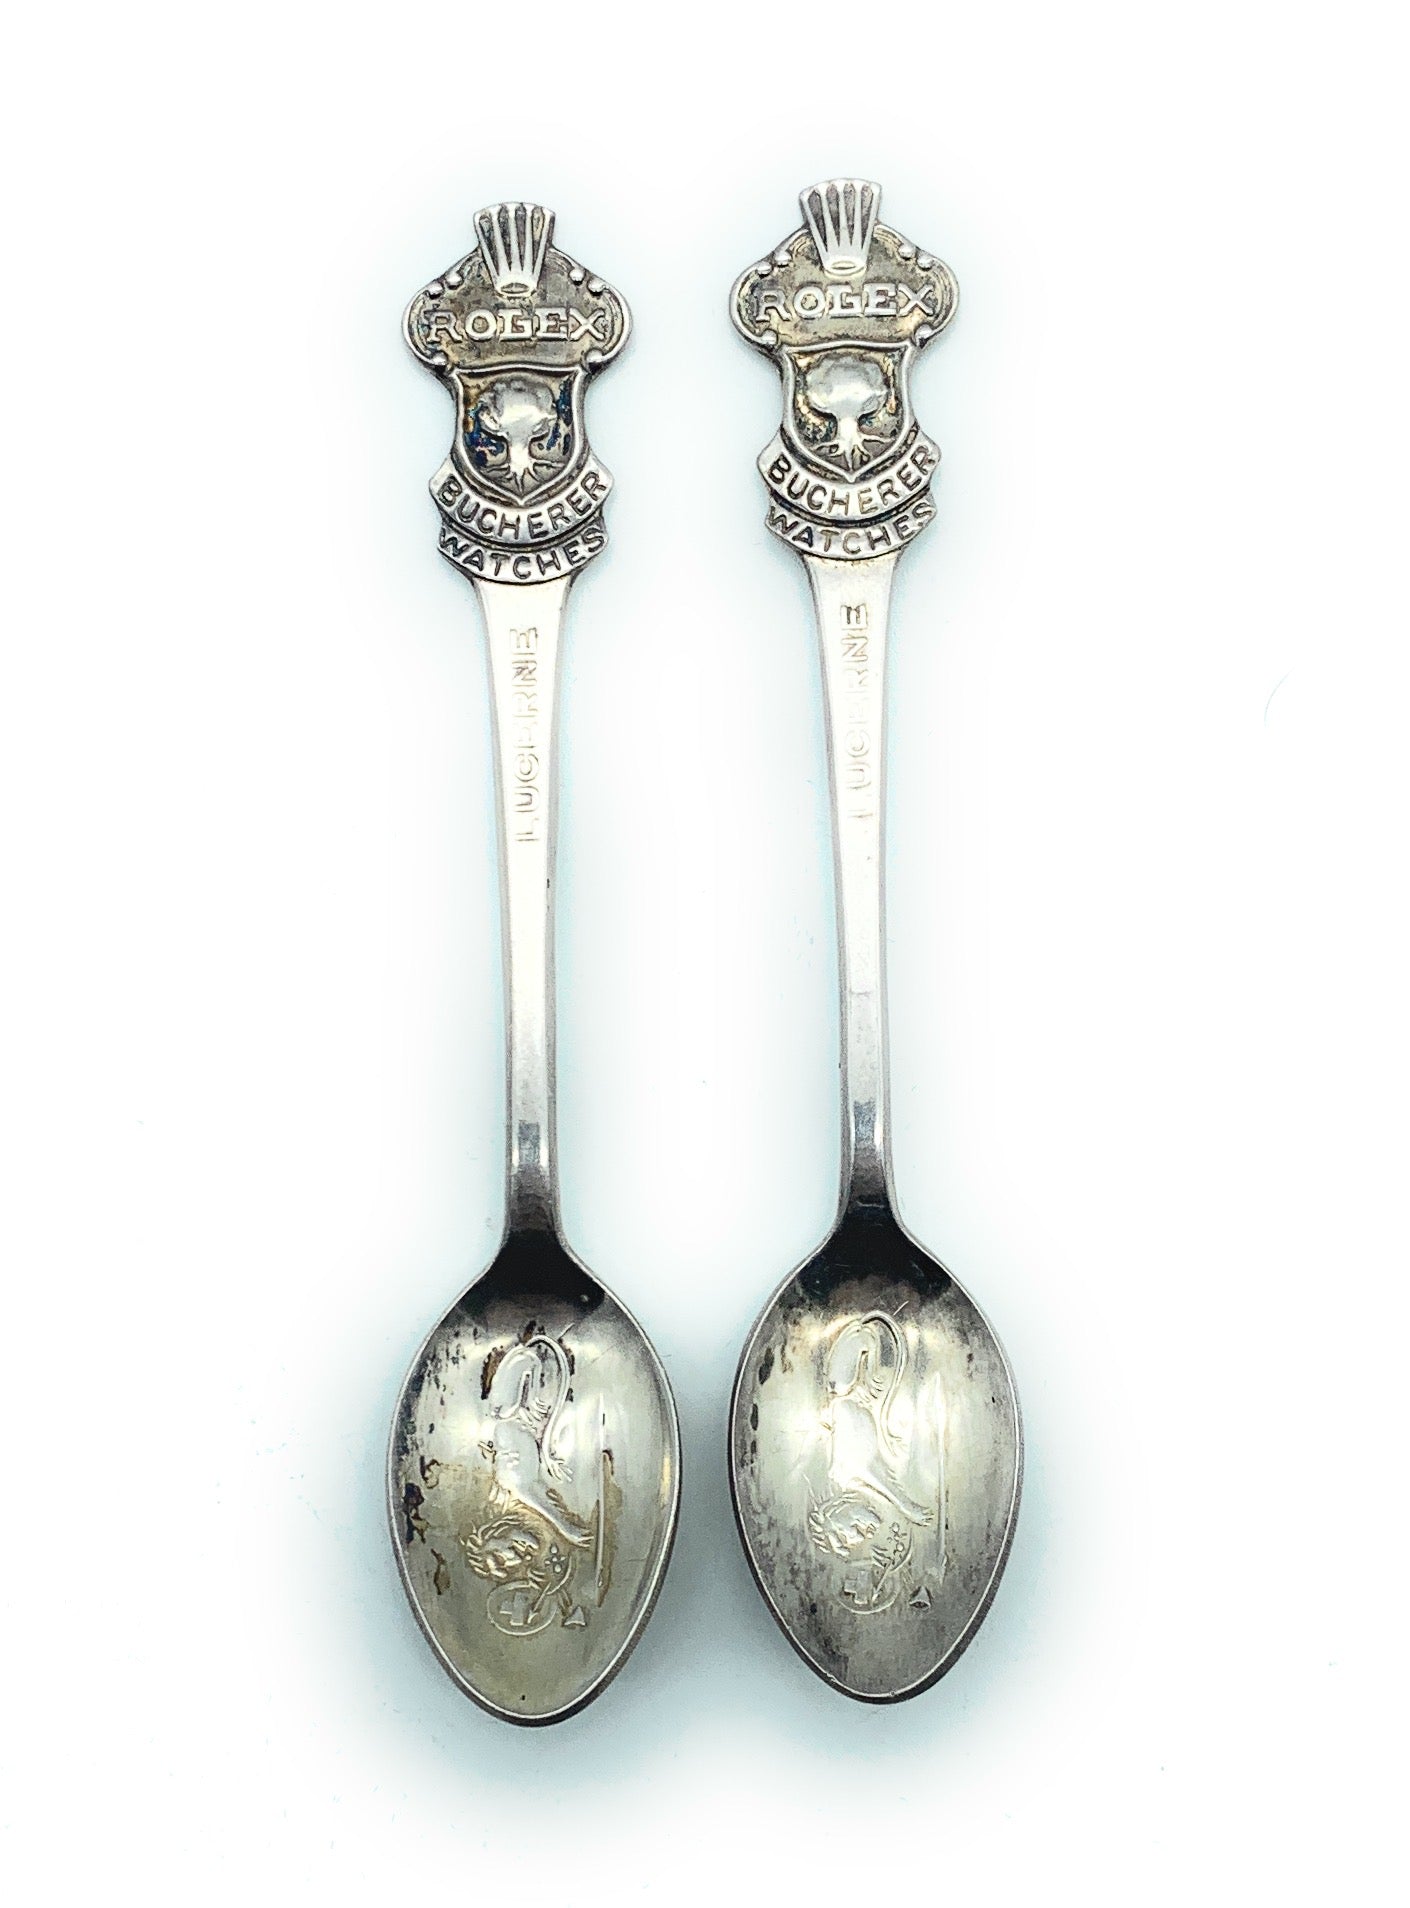 bucherer 1888 spoon